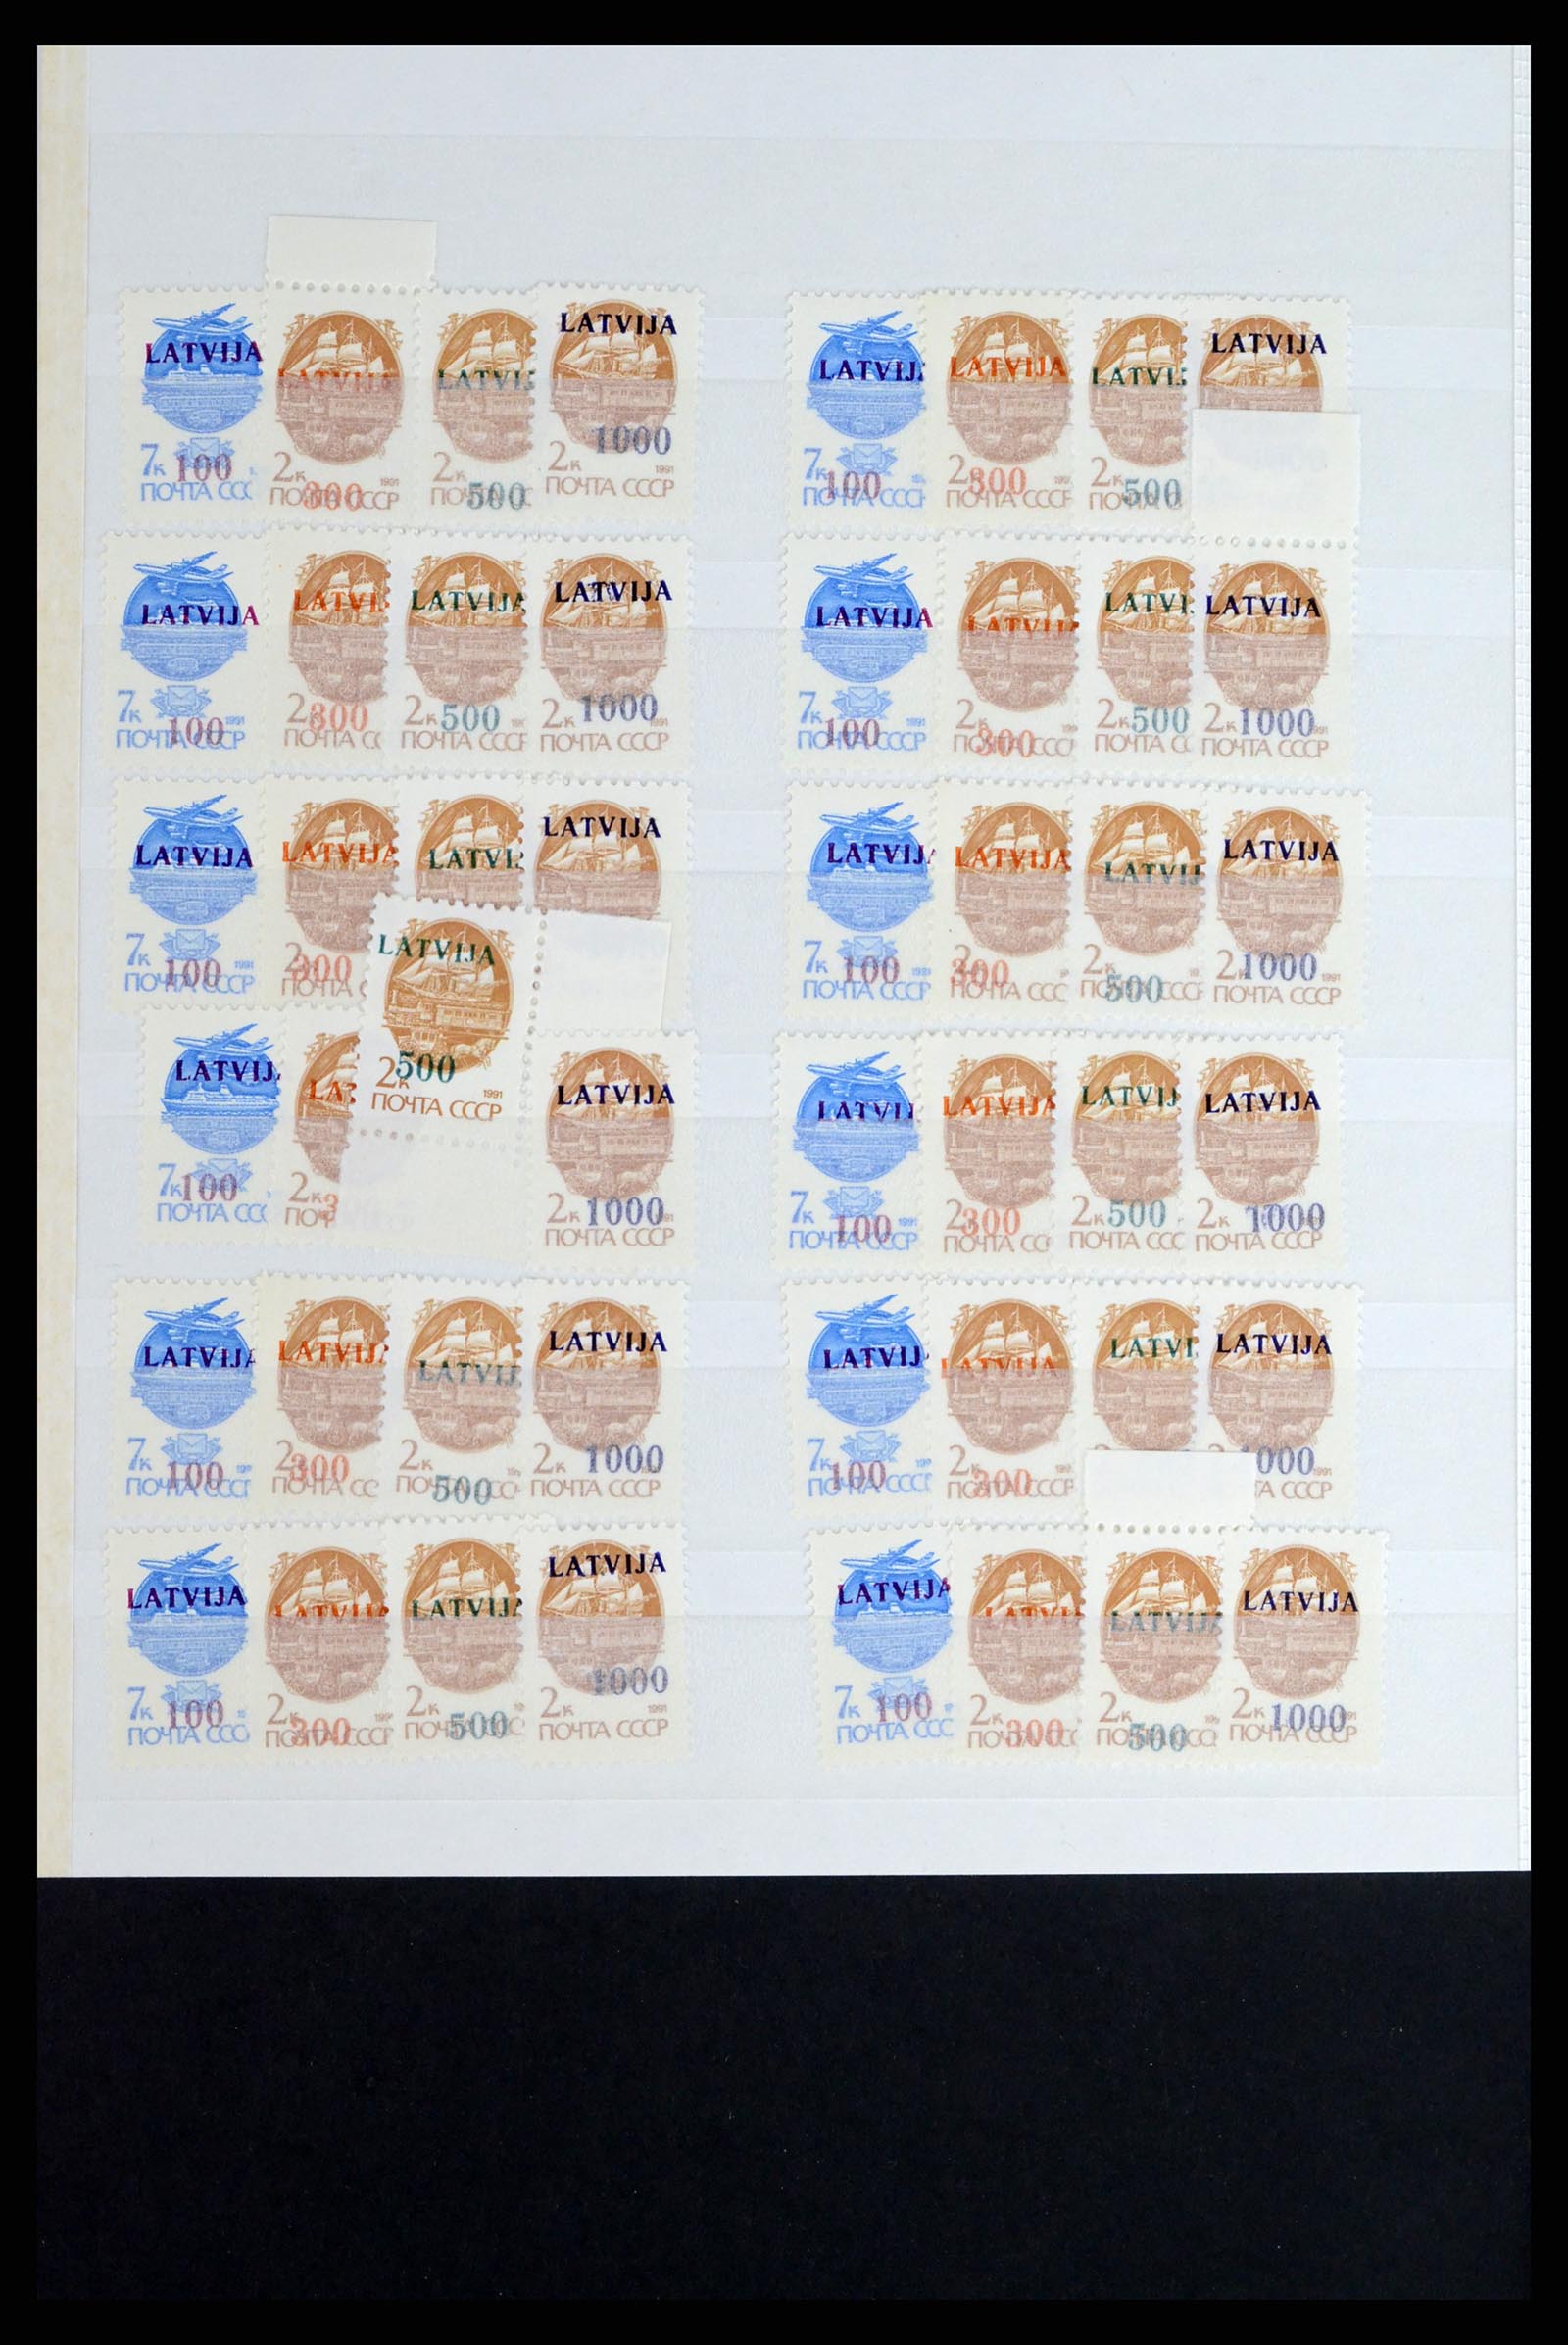 37351 301 - Postzegelverzameling 37351 Europese landen postfris 1990-2000.